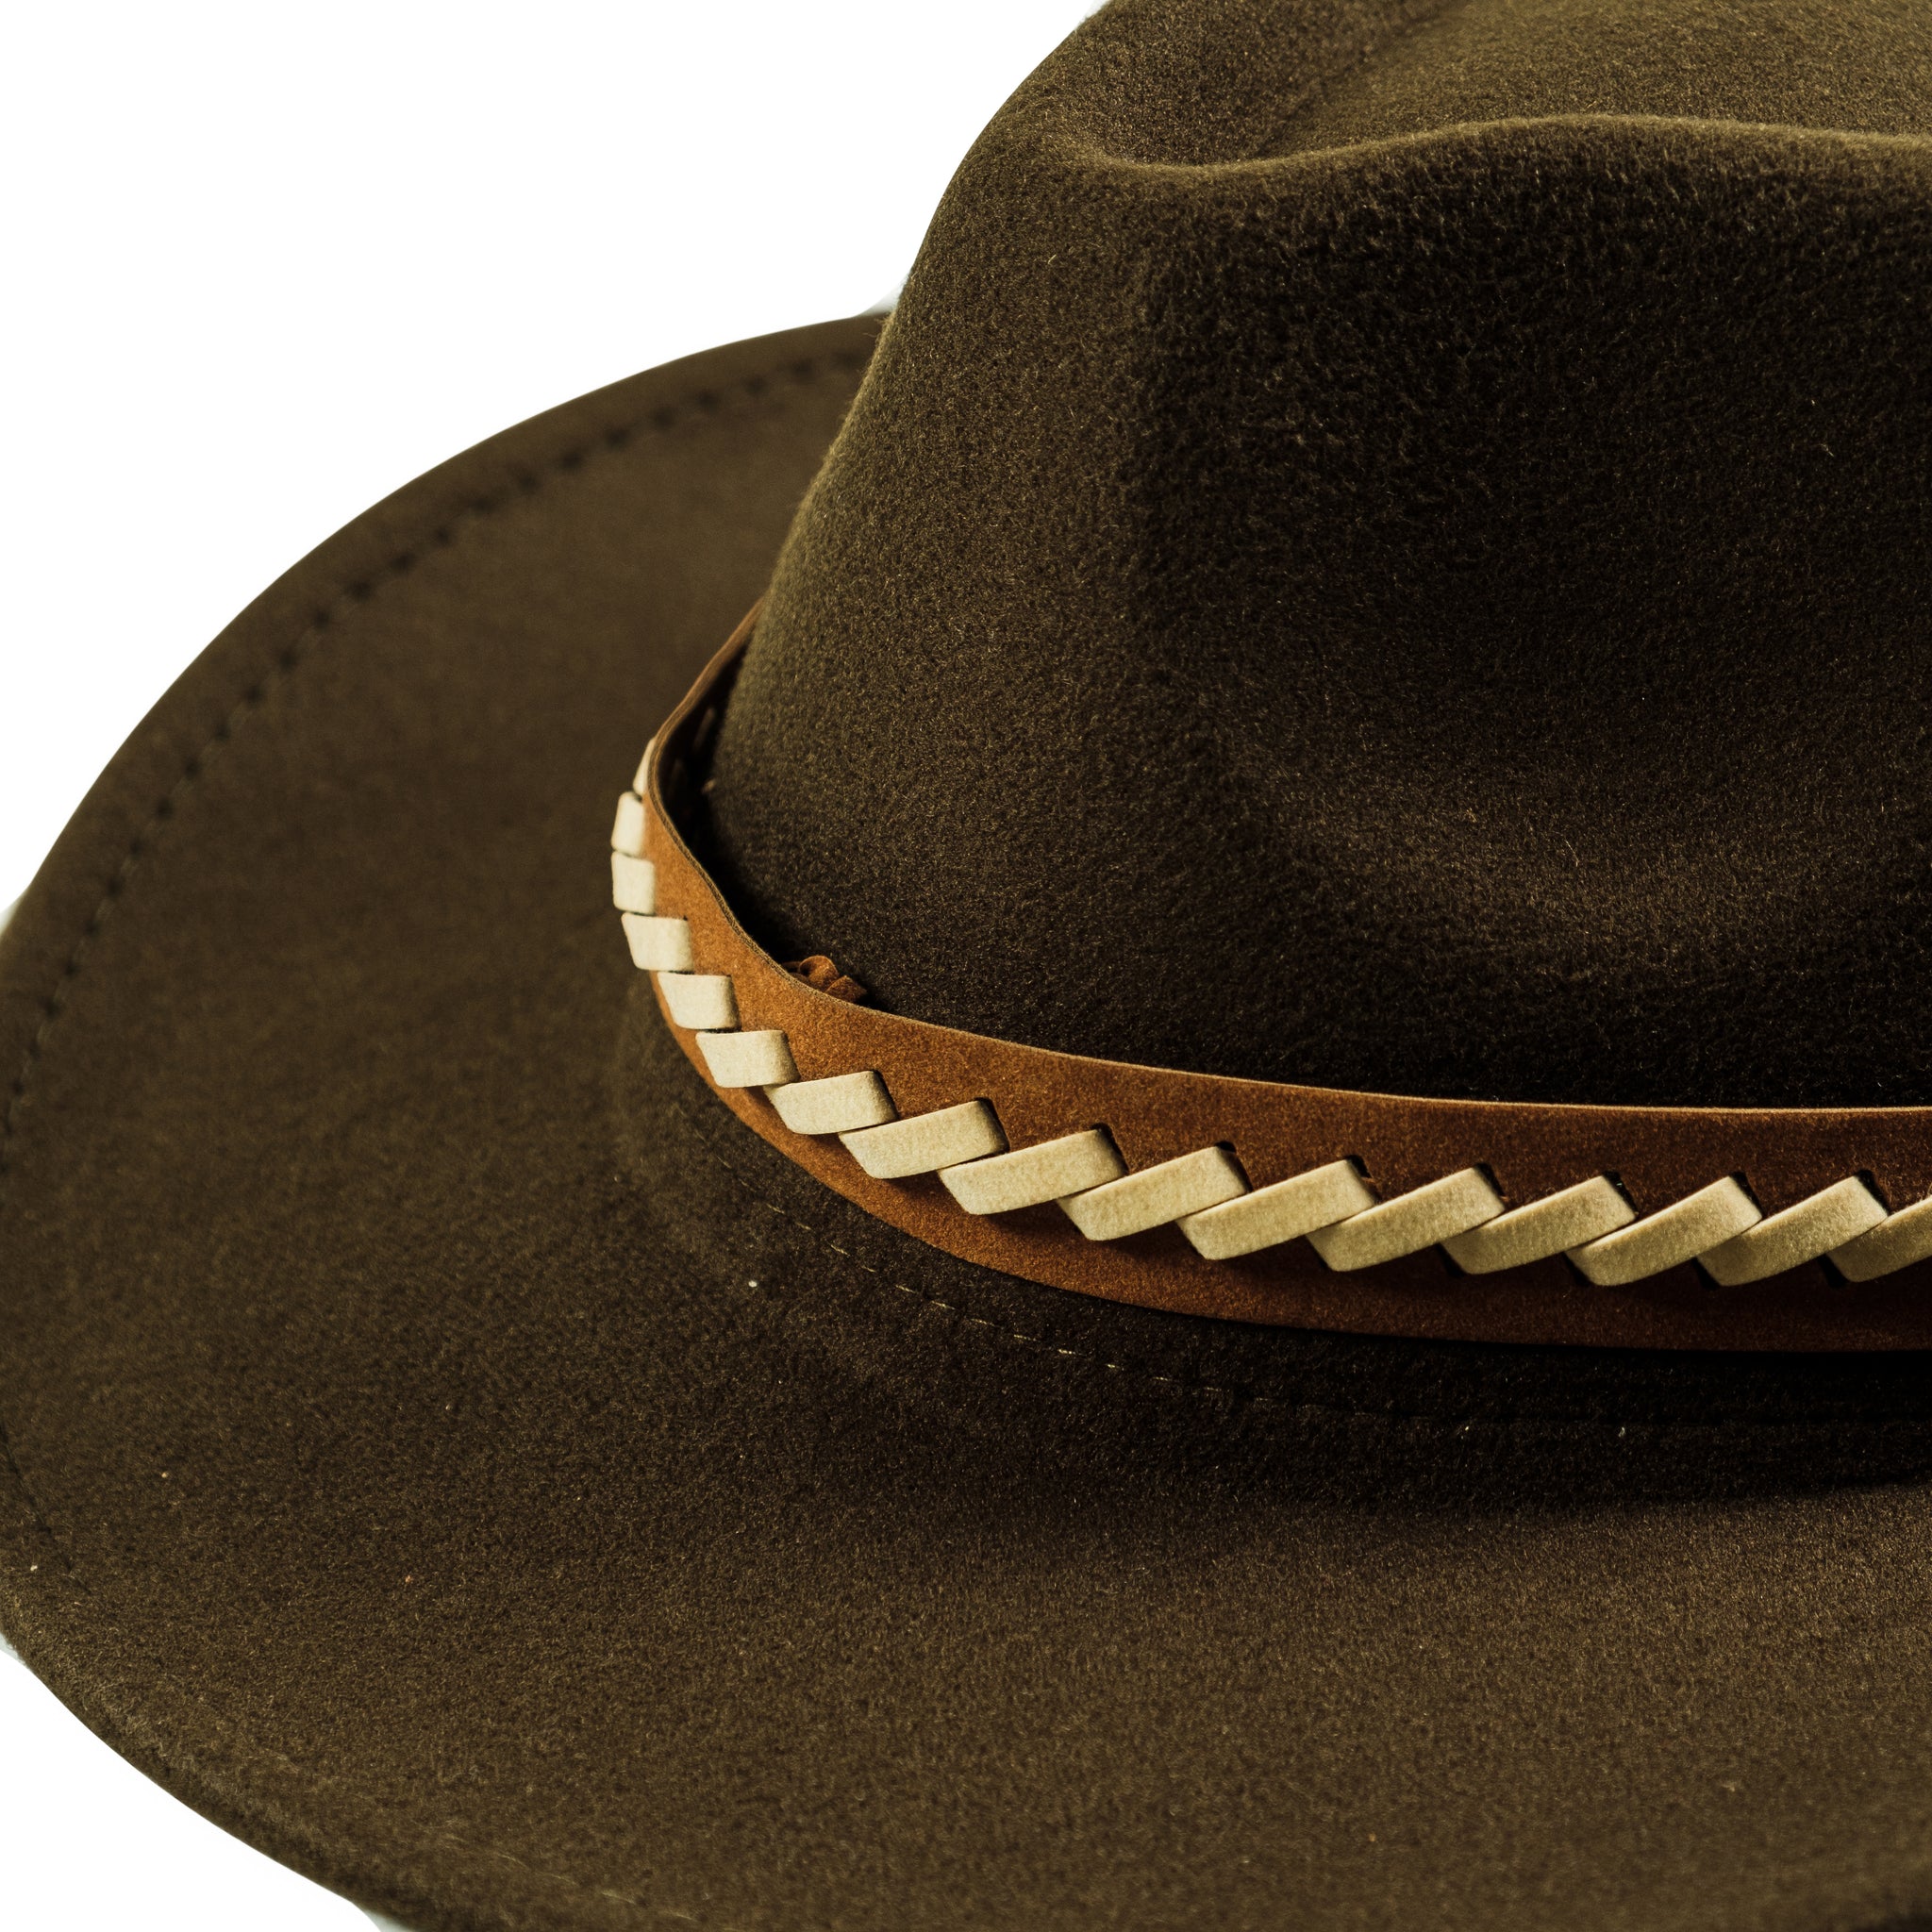 Chokore Cowboy Hat with Braided PU Belt (Forest Green)